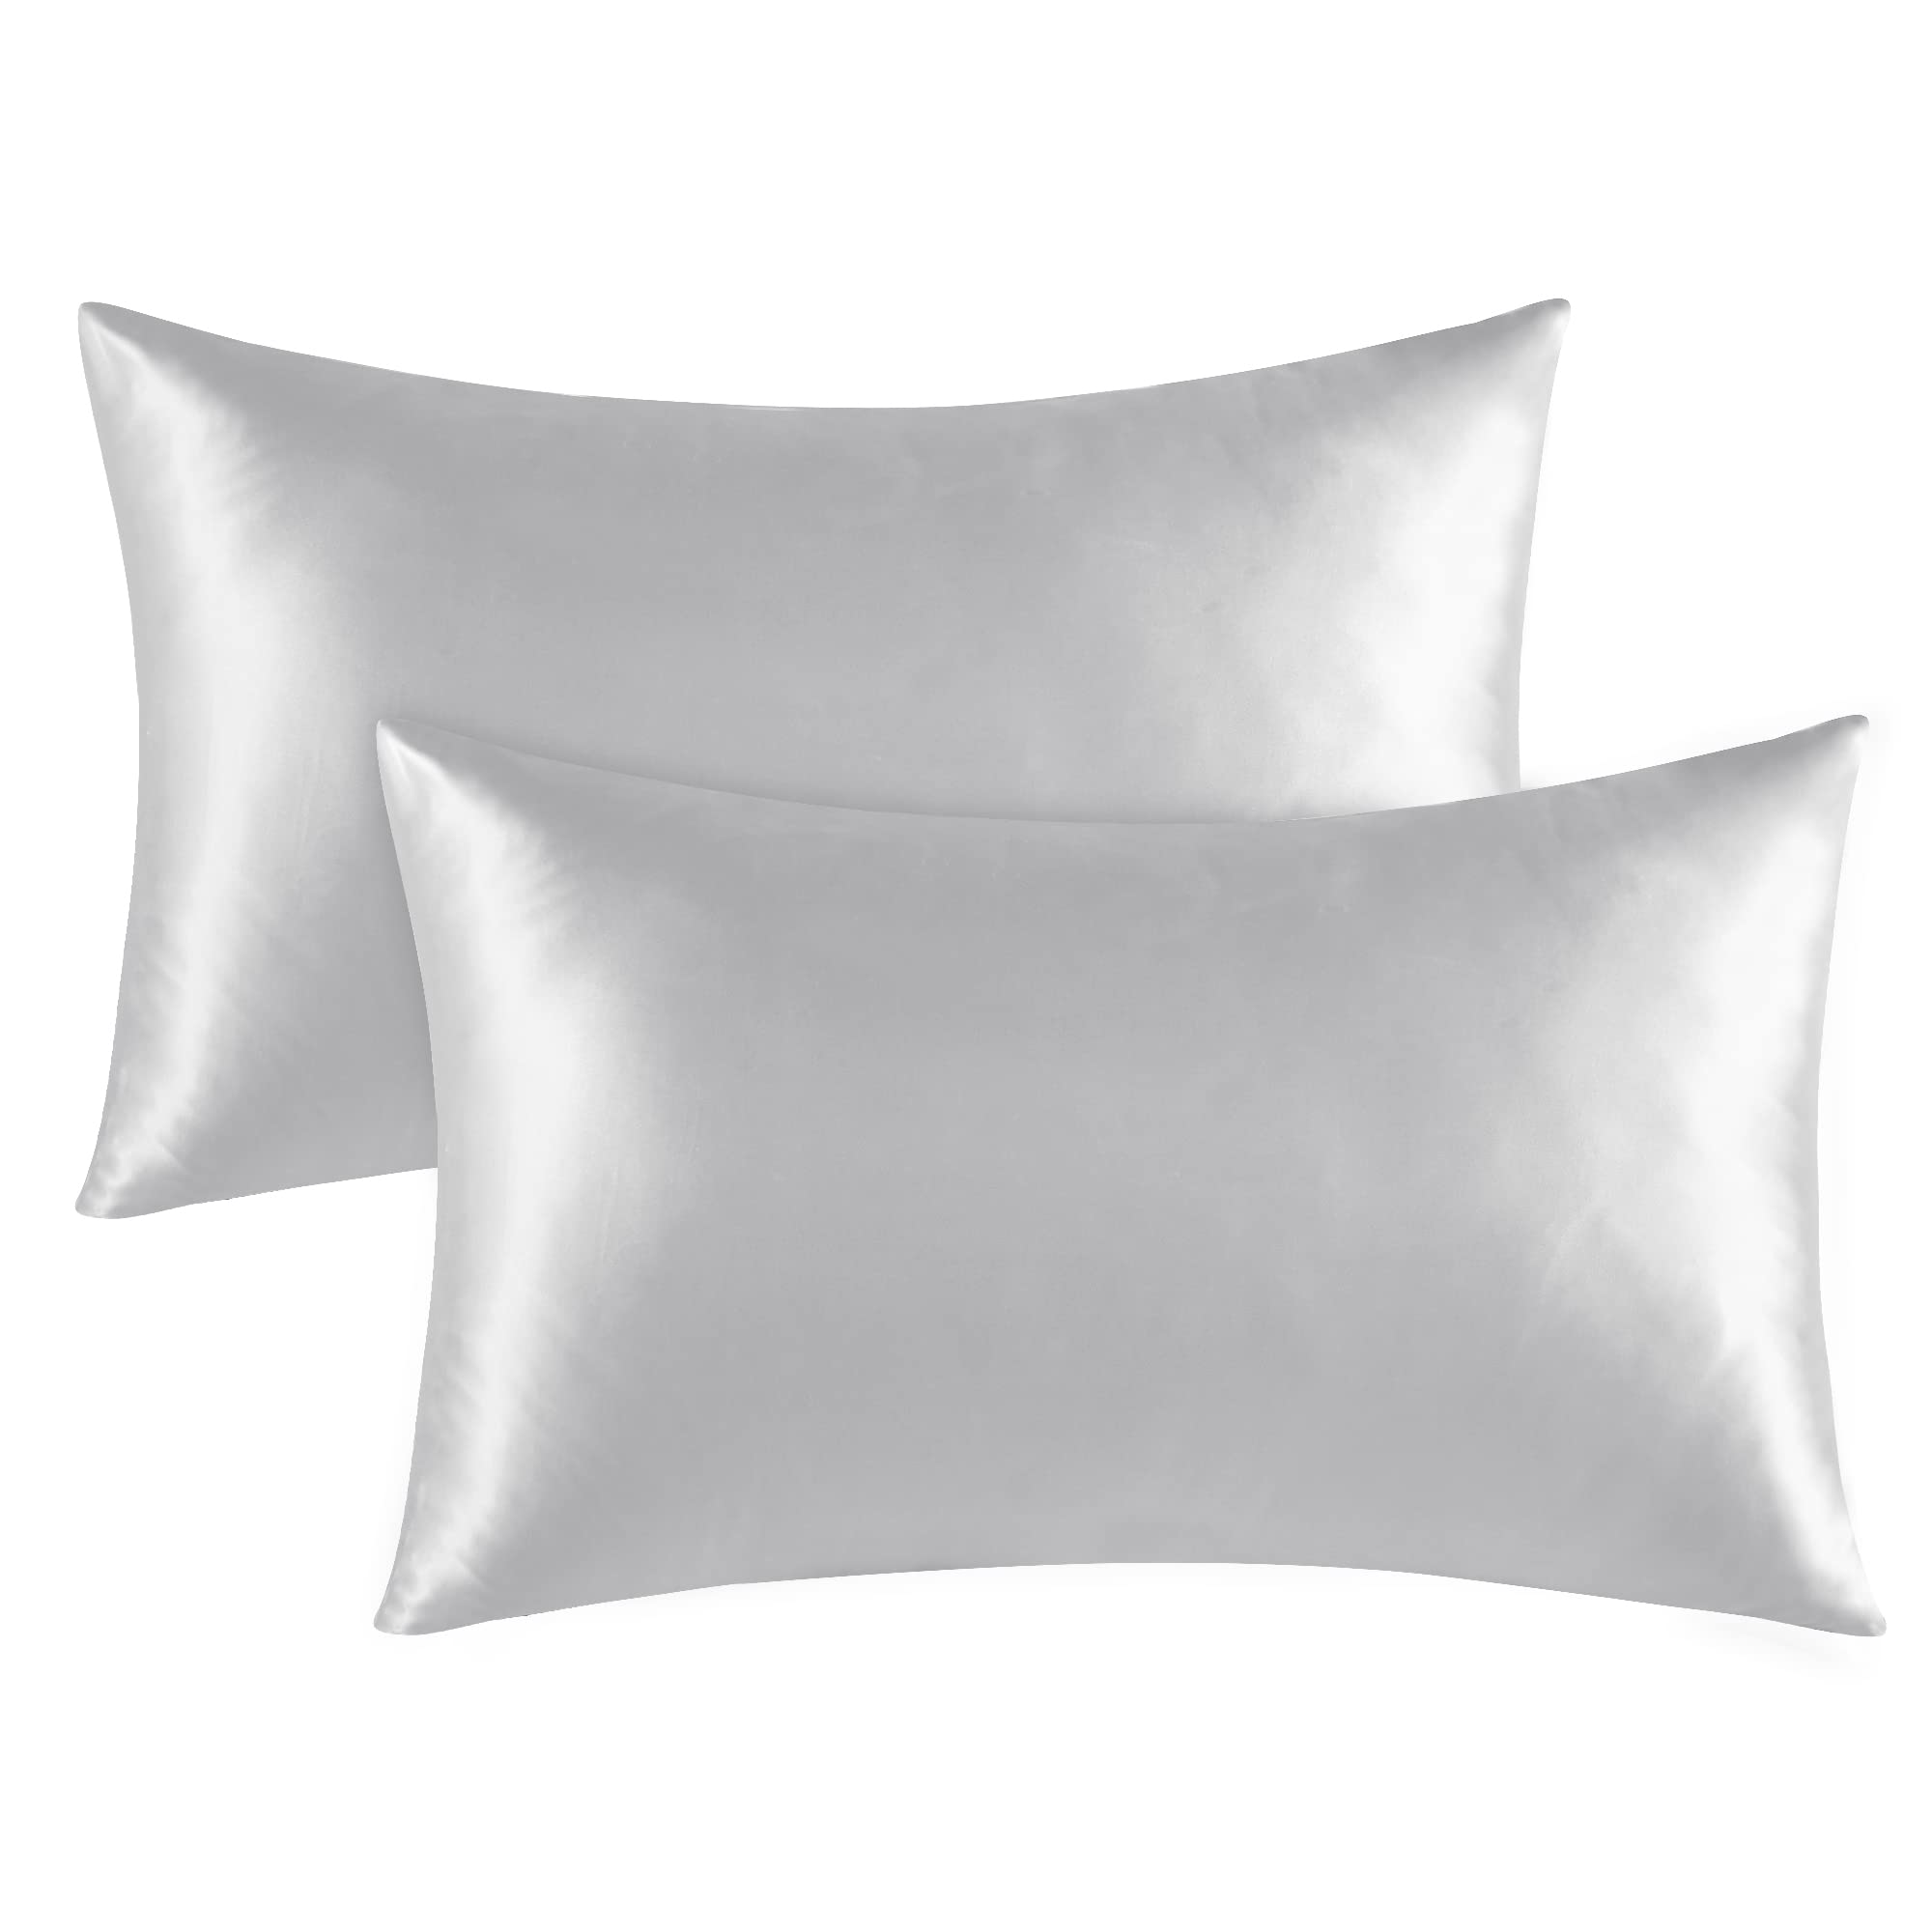 Deconovo Super Soft Satin Pillowcase Light Grey Pillow Cases 2 Pack for Hair and Skin, 50 x 75 cm, Light Grey